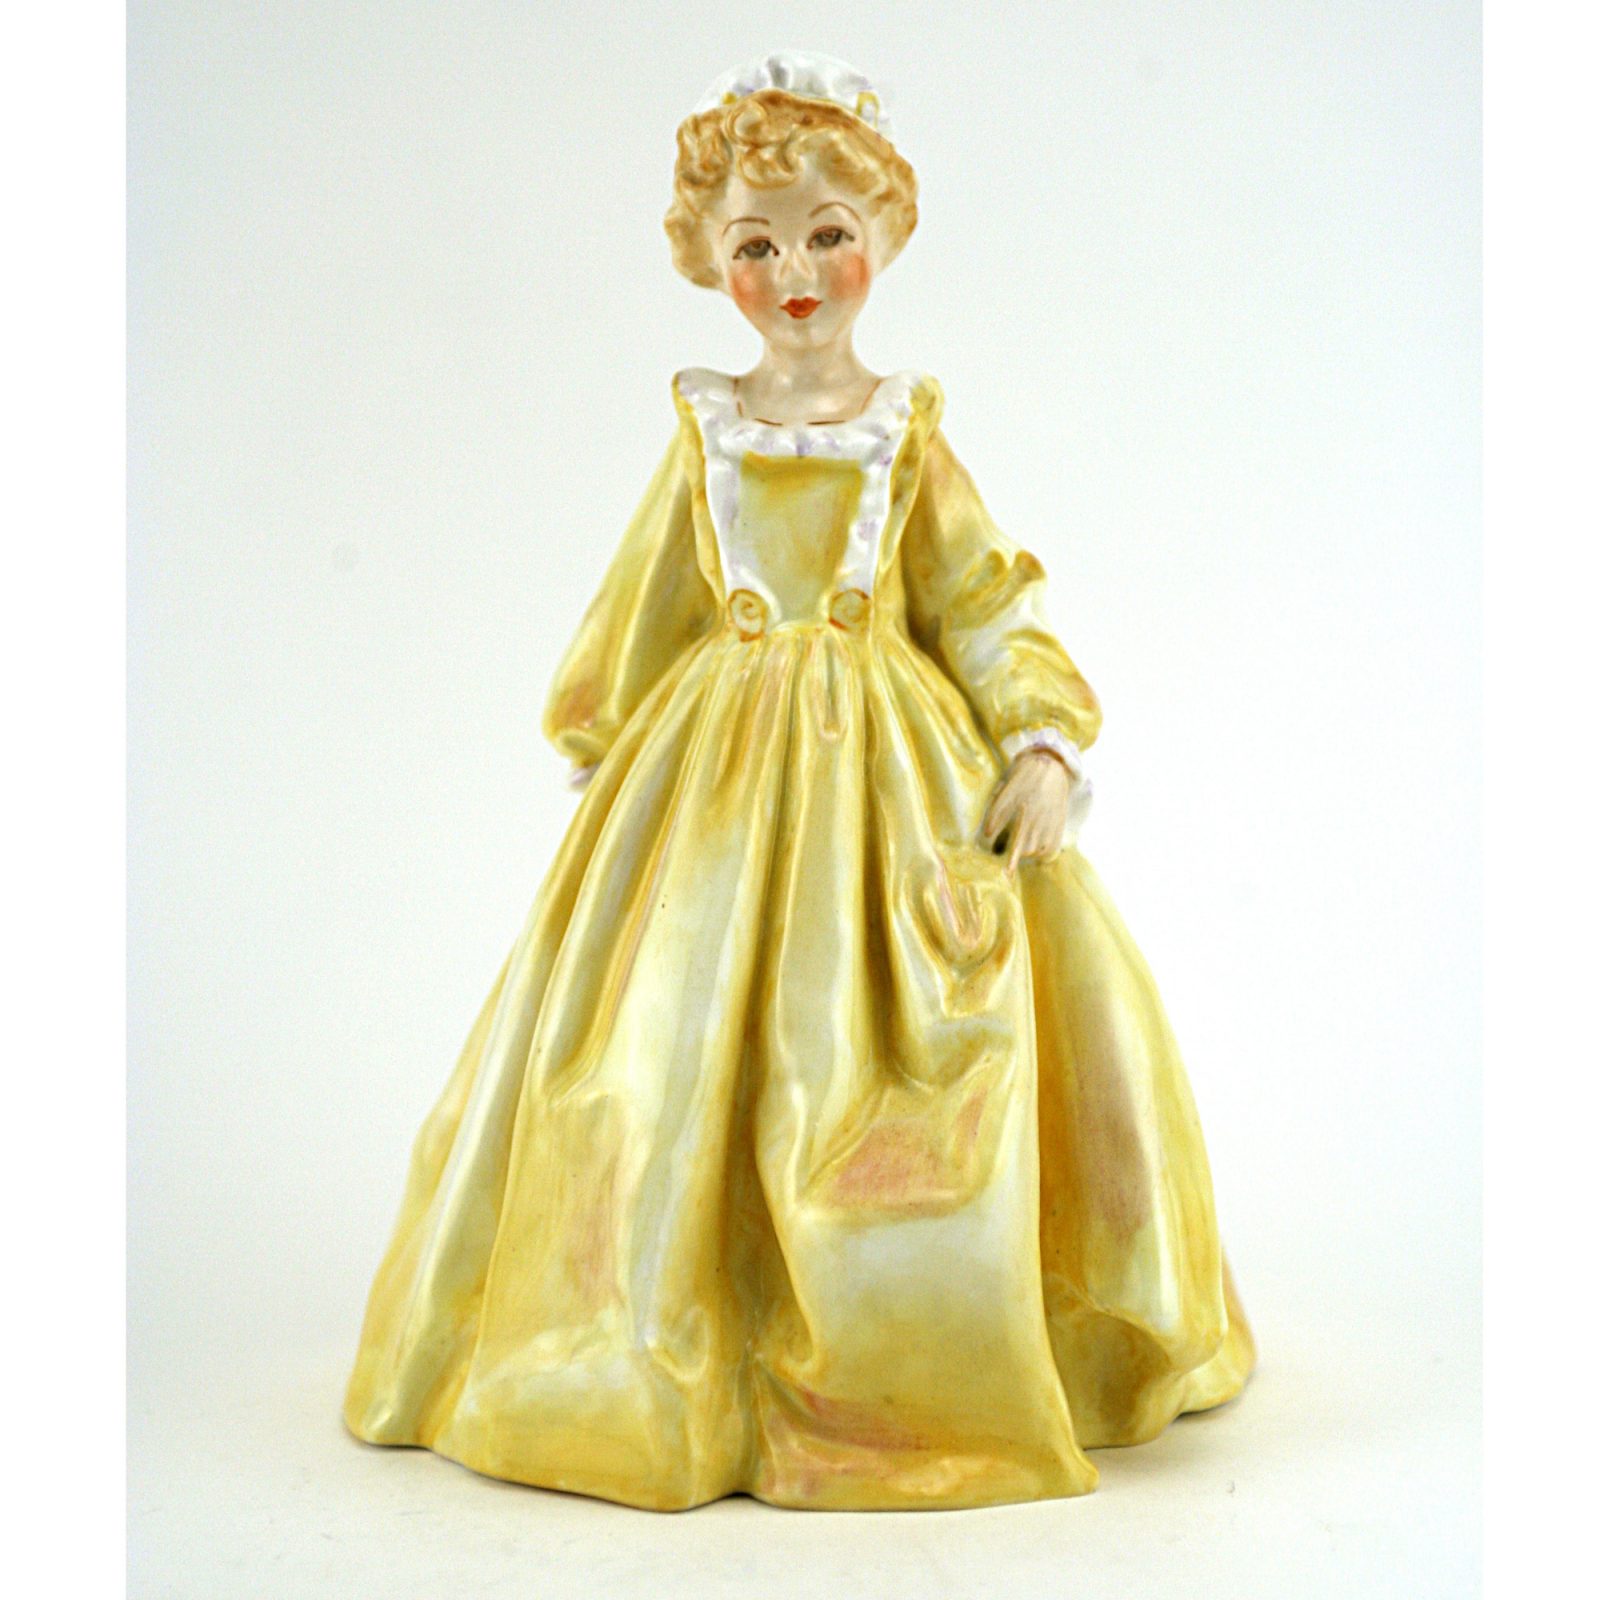 Grandmother's Dress (yellow) RW3081 - Royal Worcester Figurine